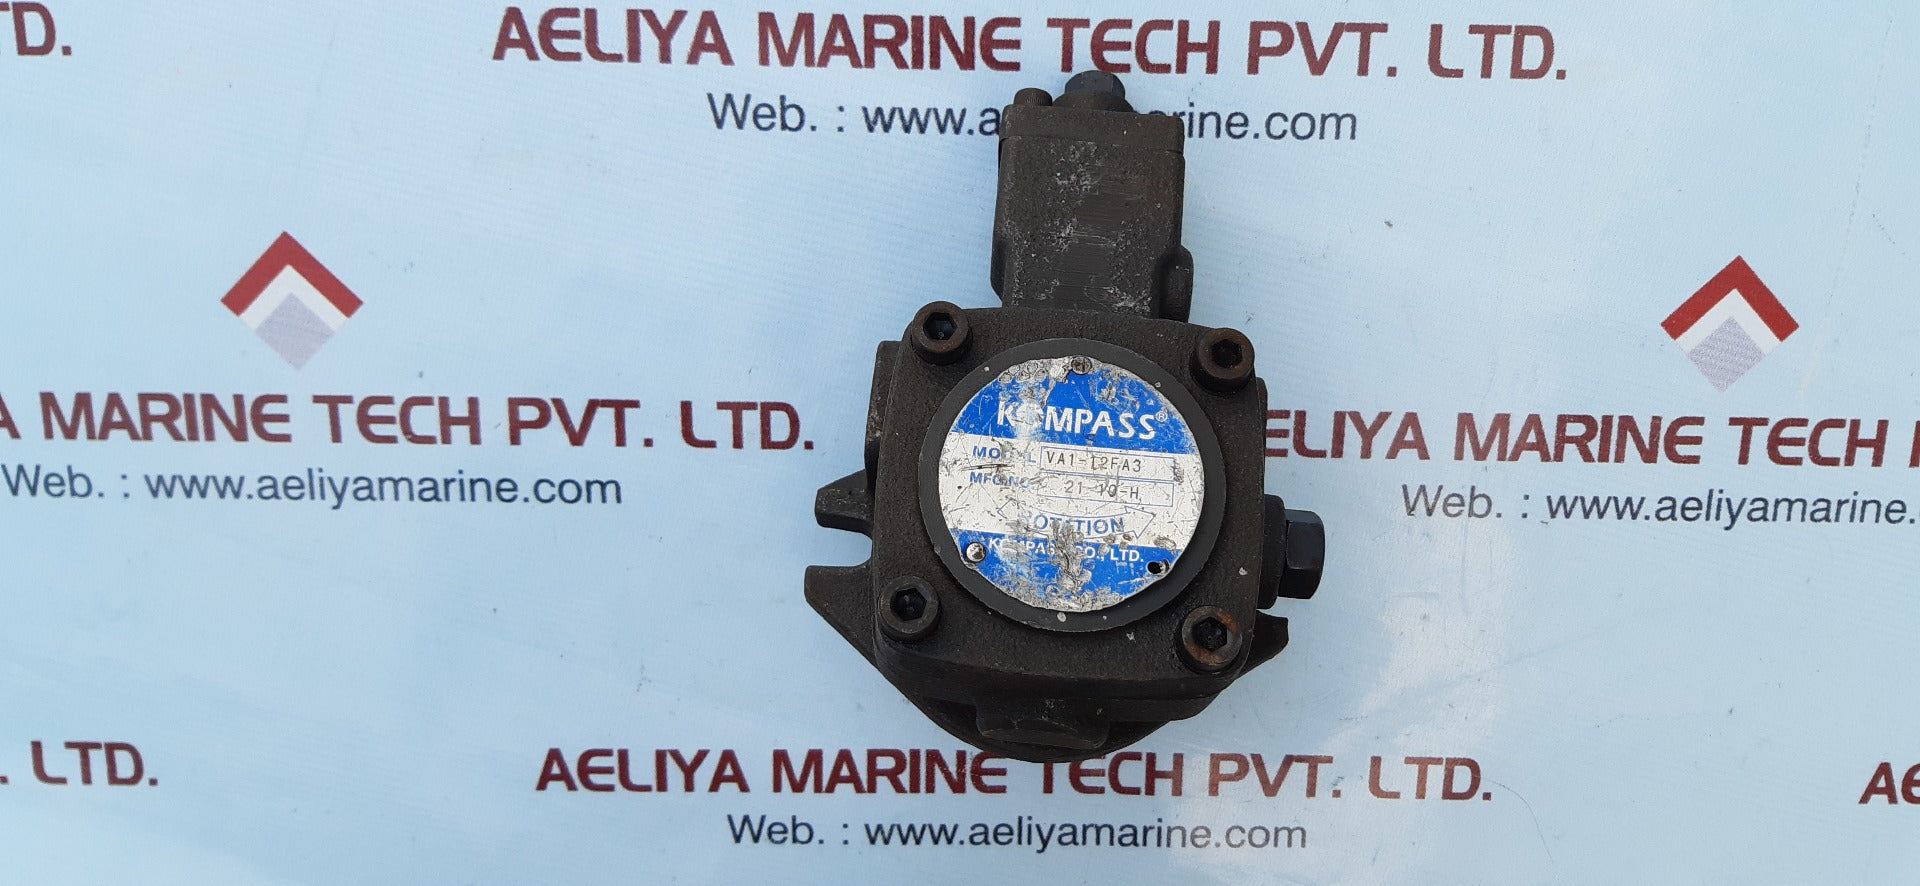 Kompass va1-12fa3 hydraulic vane pump